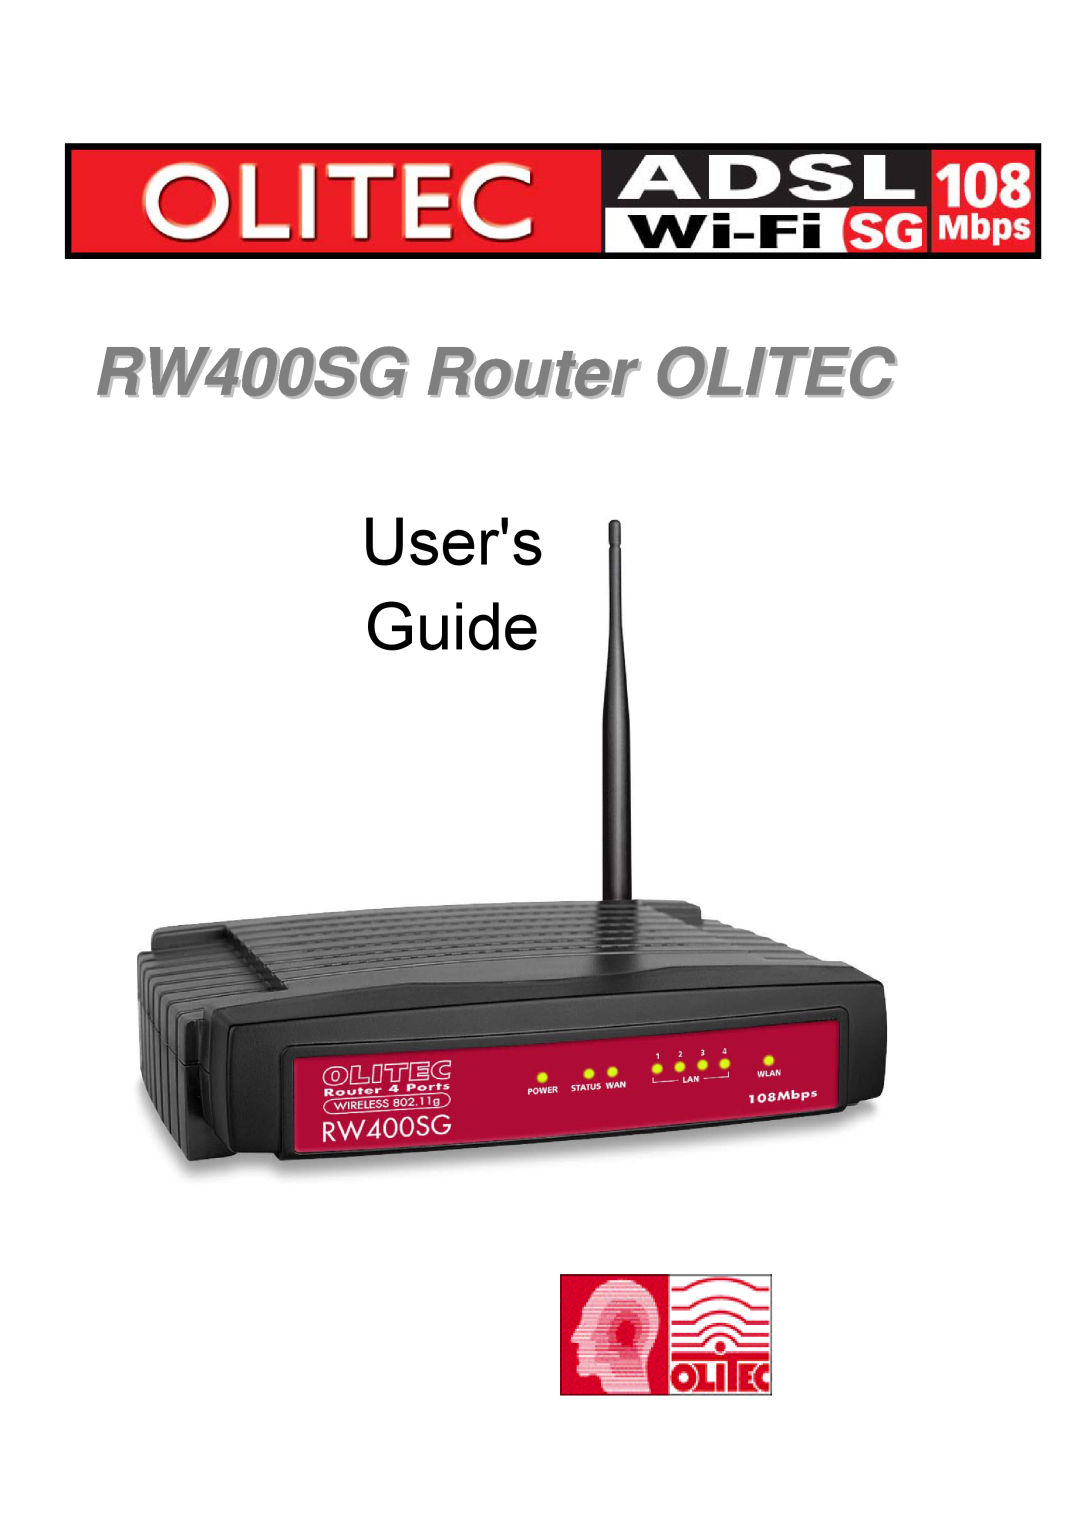 Olitec manual RW400SG Router OLITEC, Users Guide 